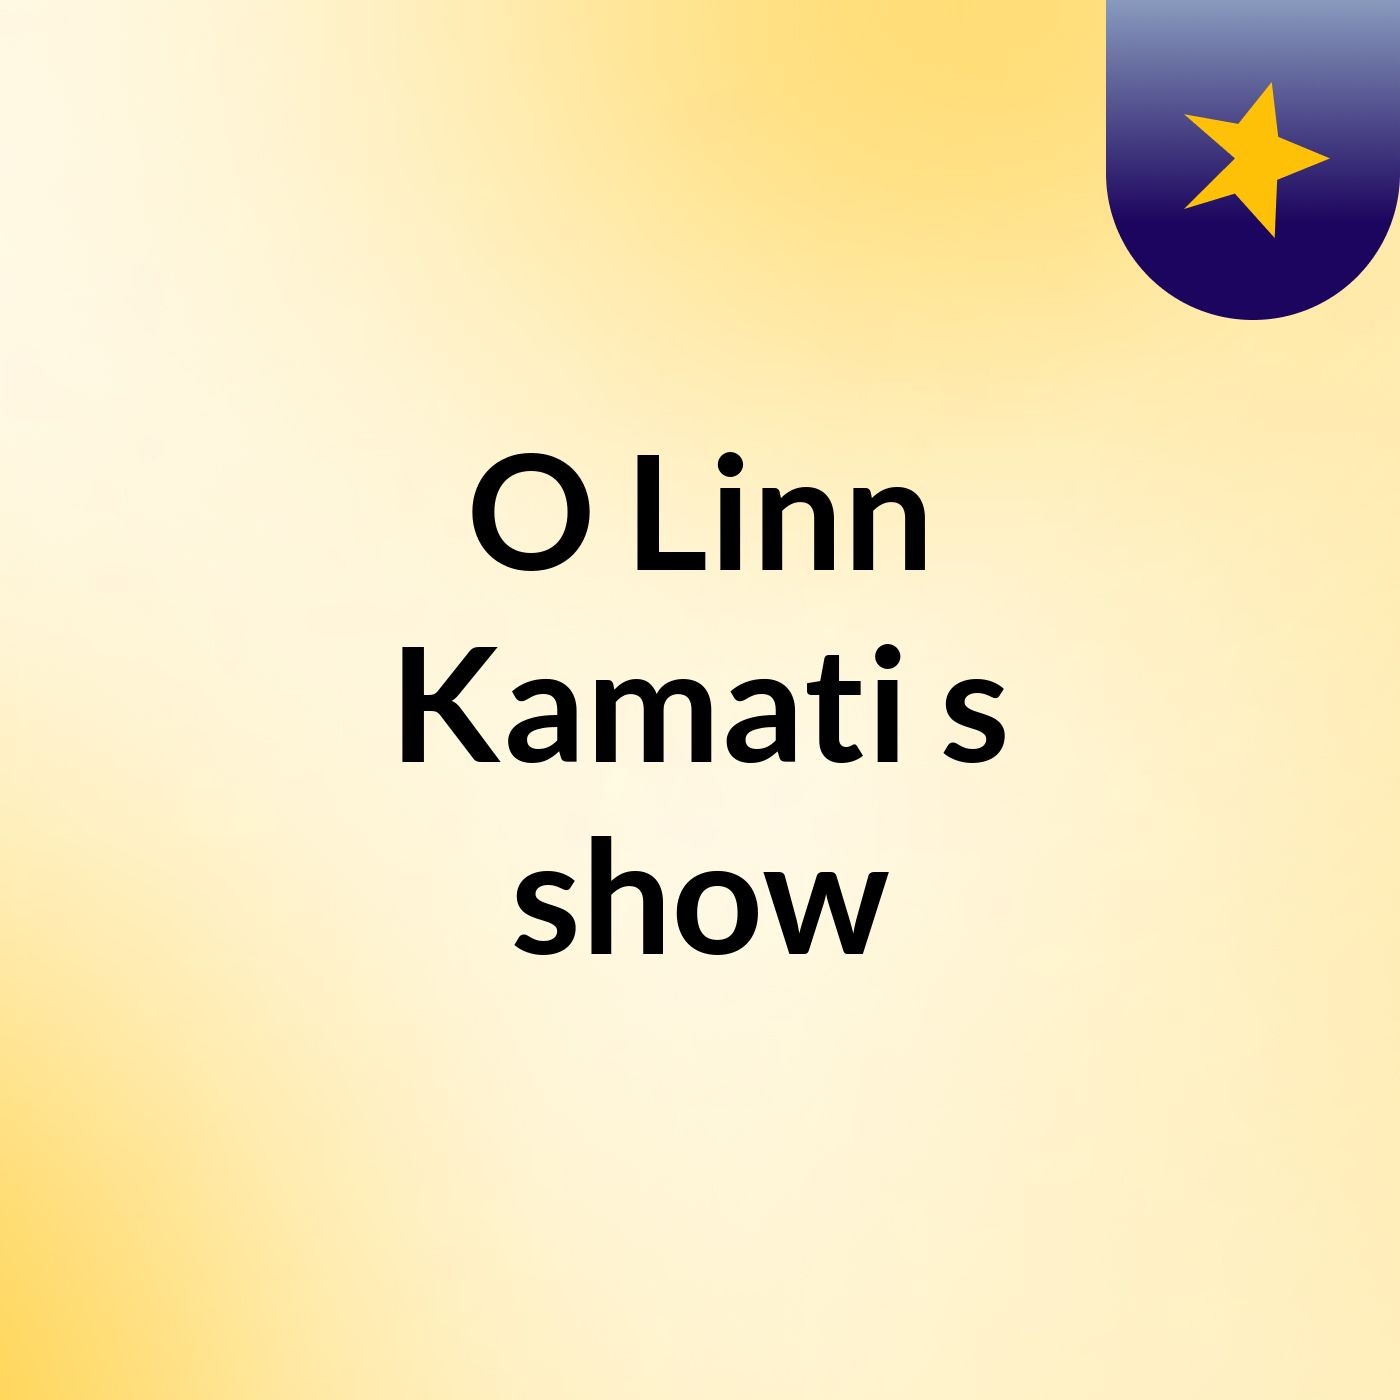 O'Linn Kamati's show